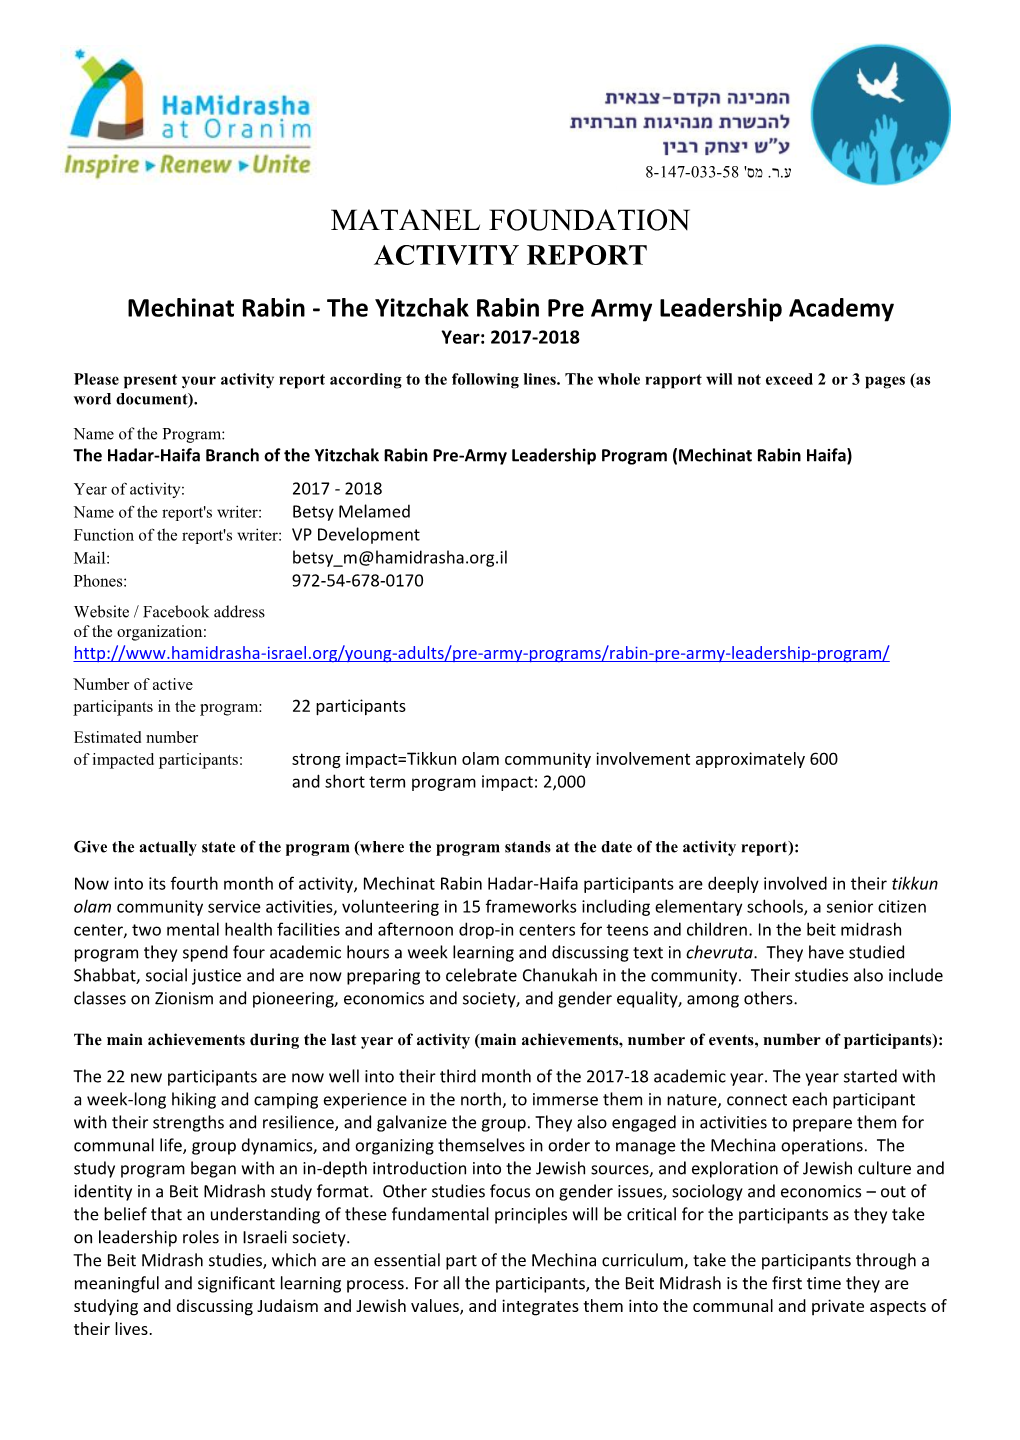 Matanel Foundation Activity Report